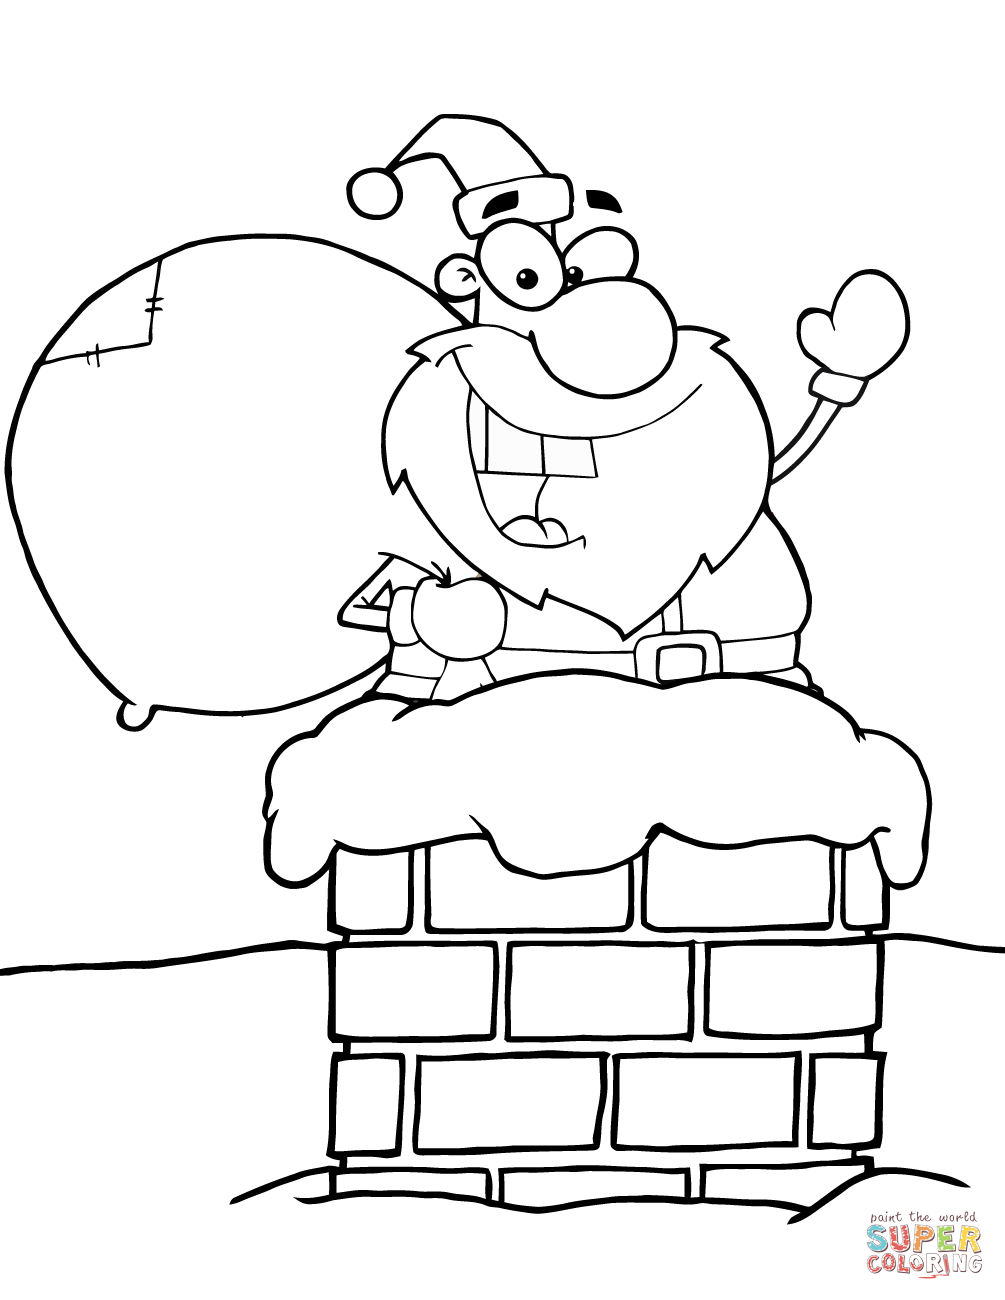 Santa claus in chimney coloring page